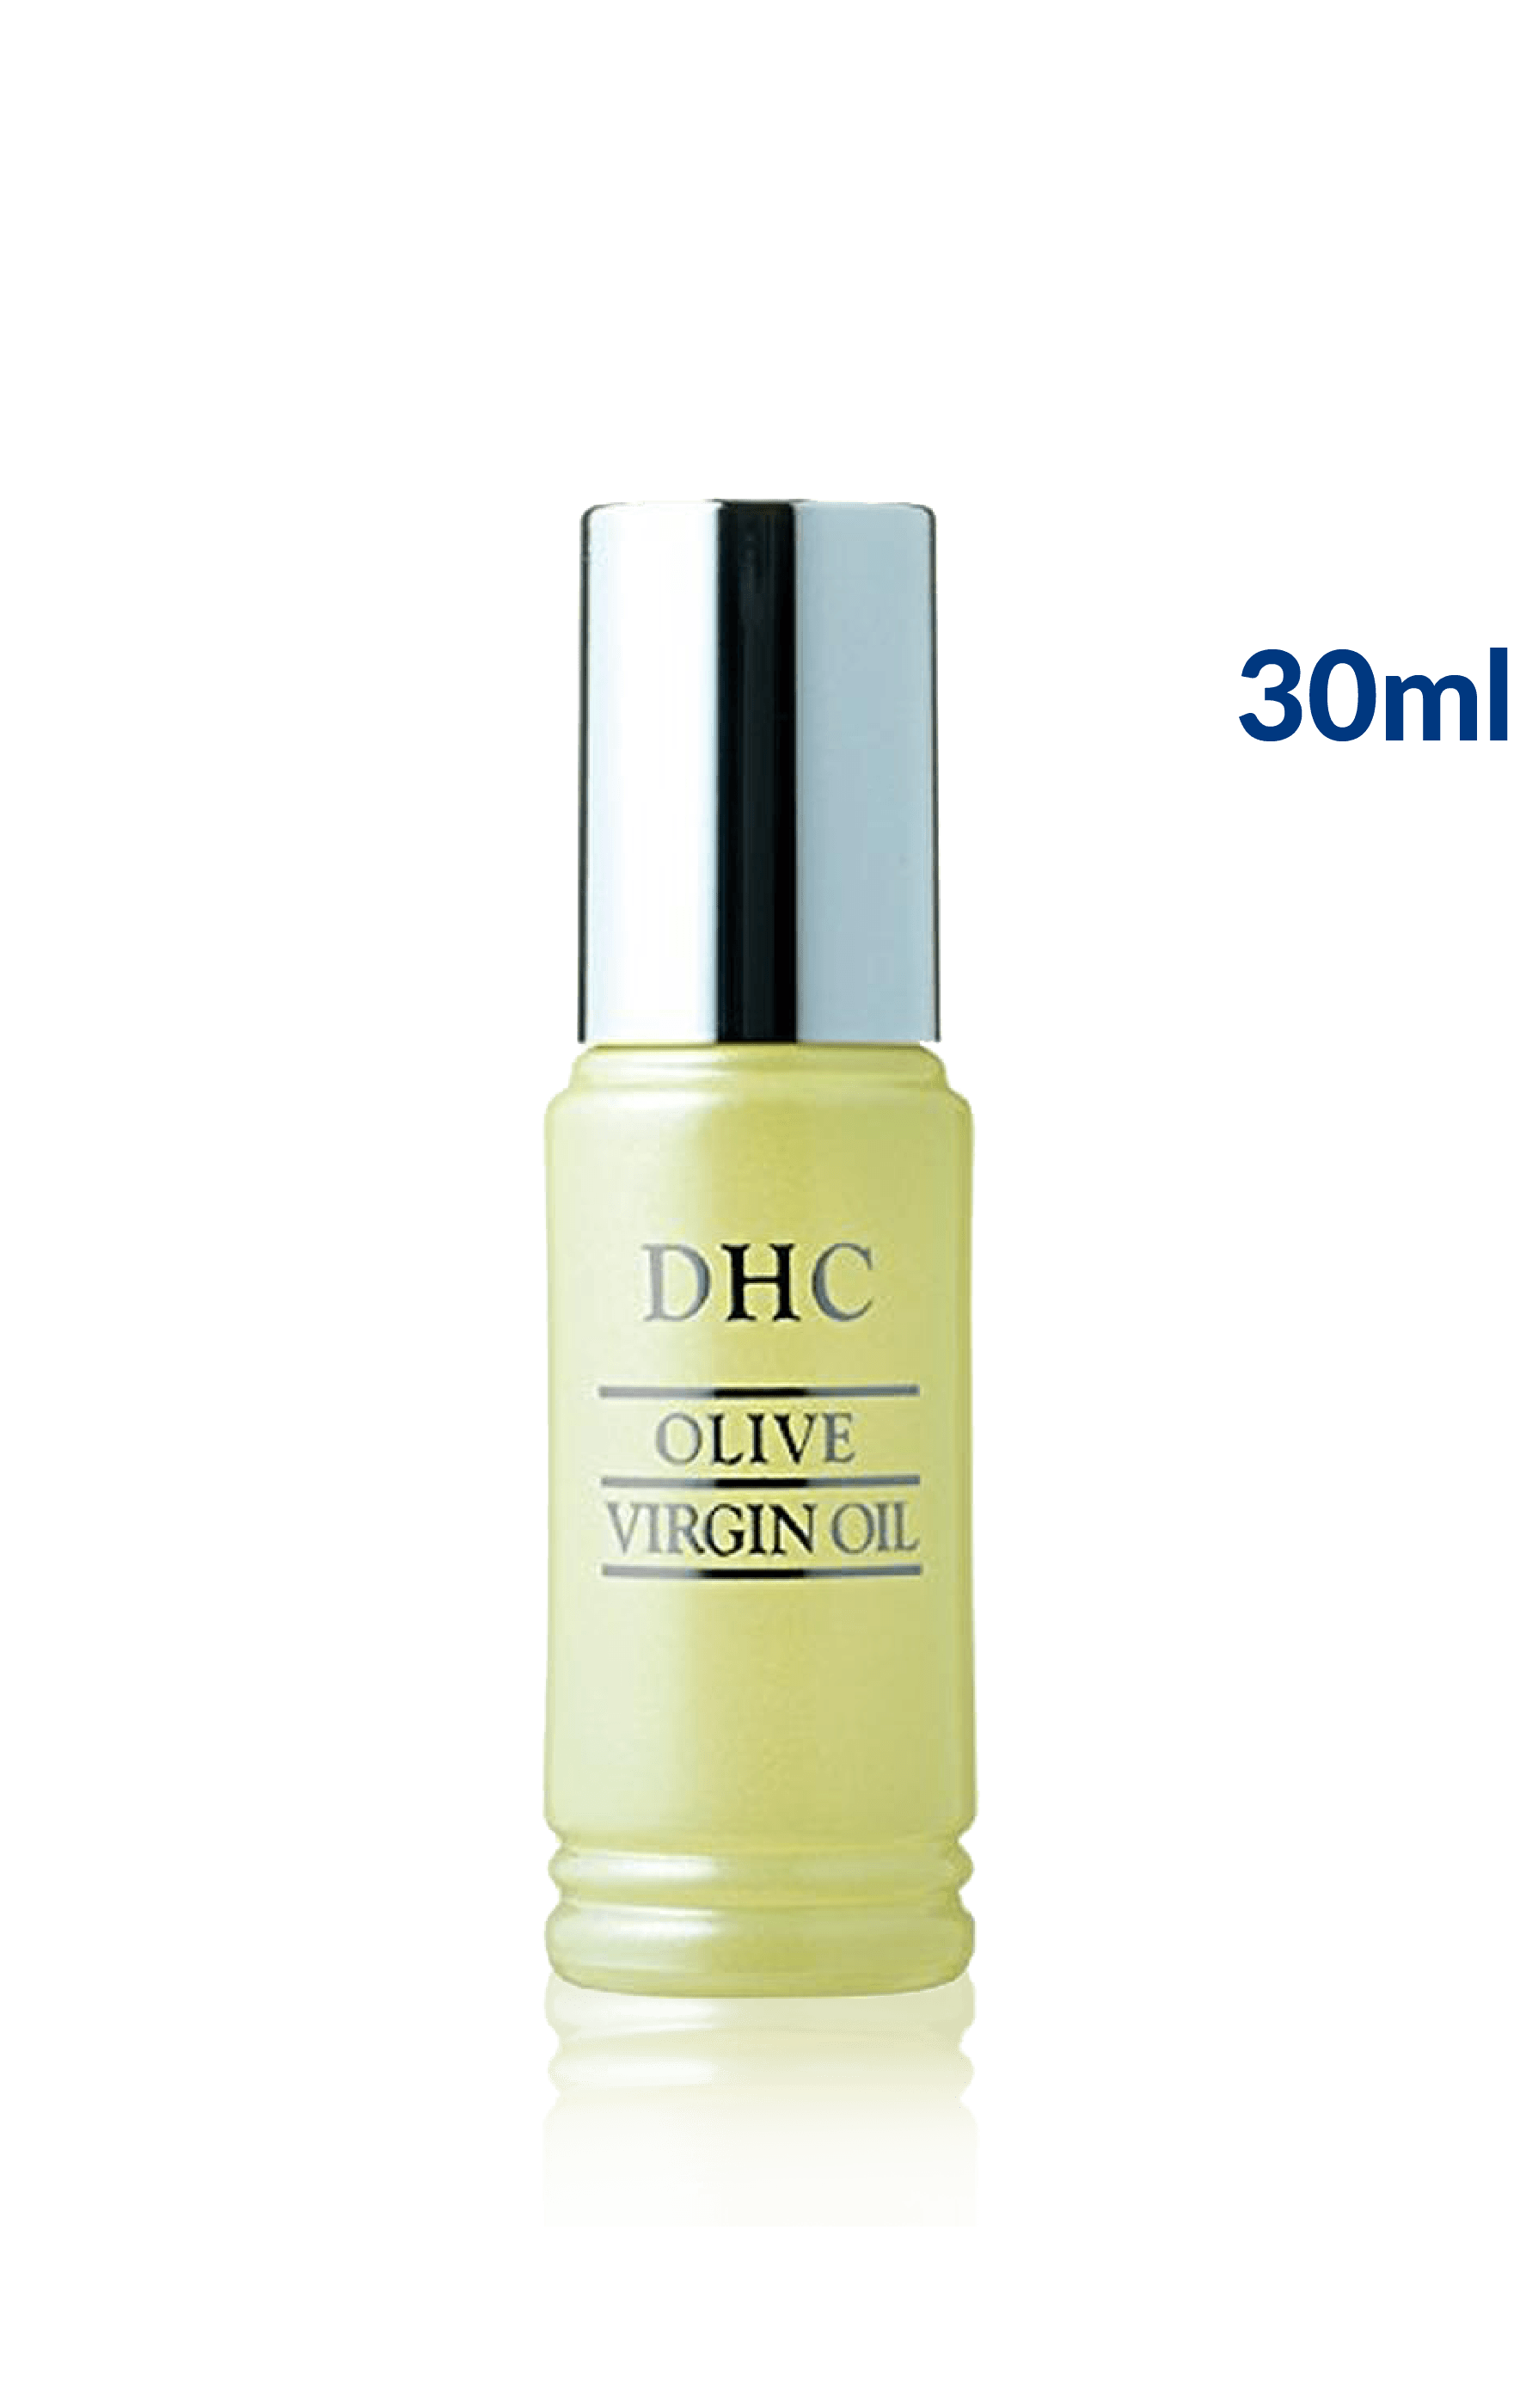 Olive Virgin Oil